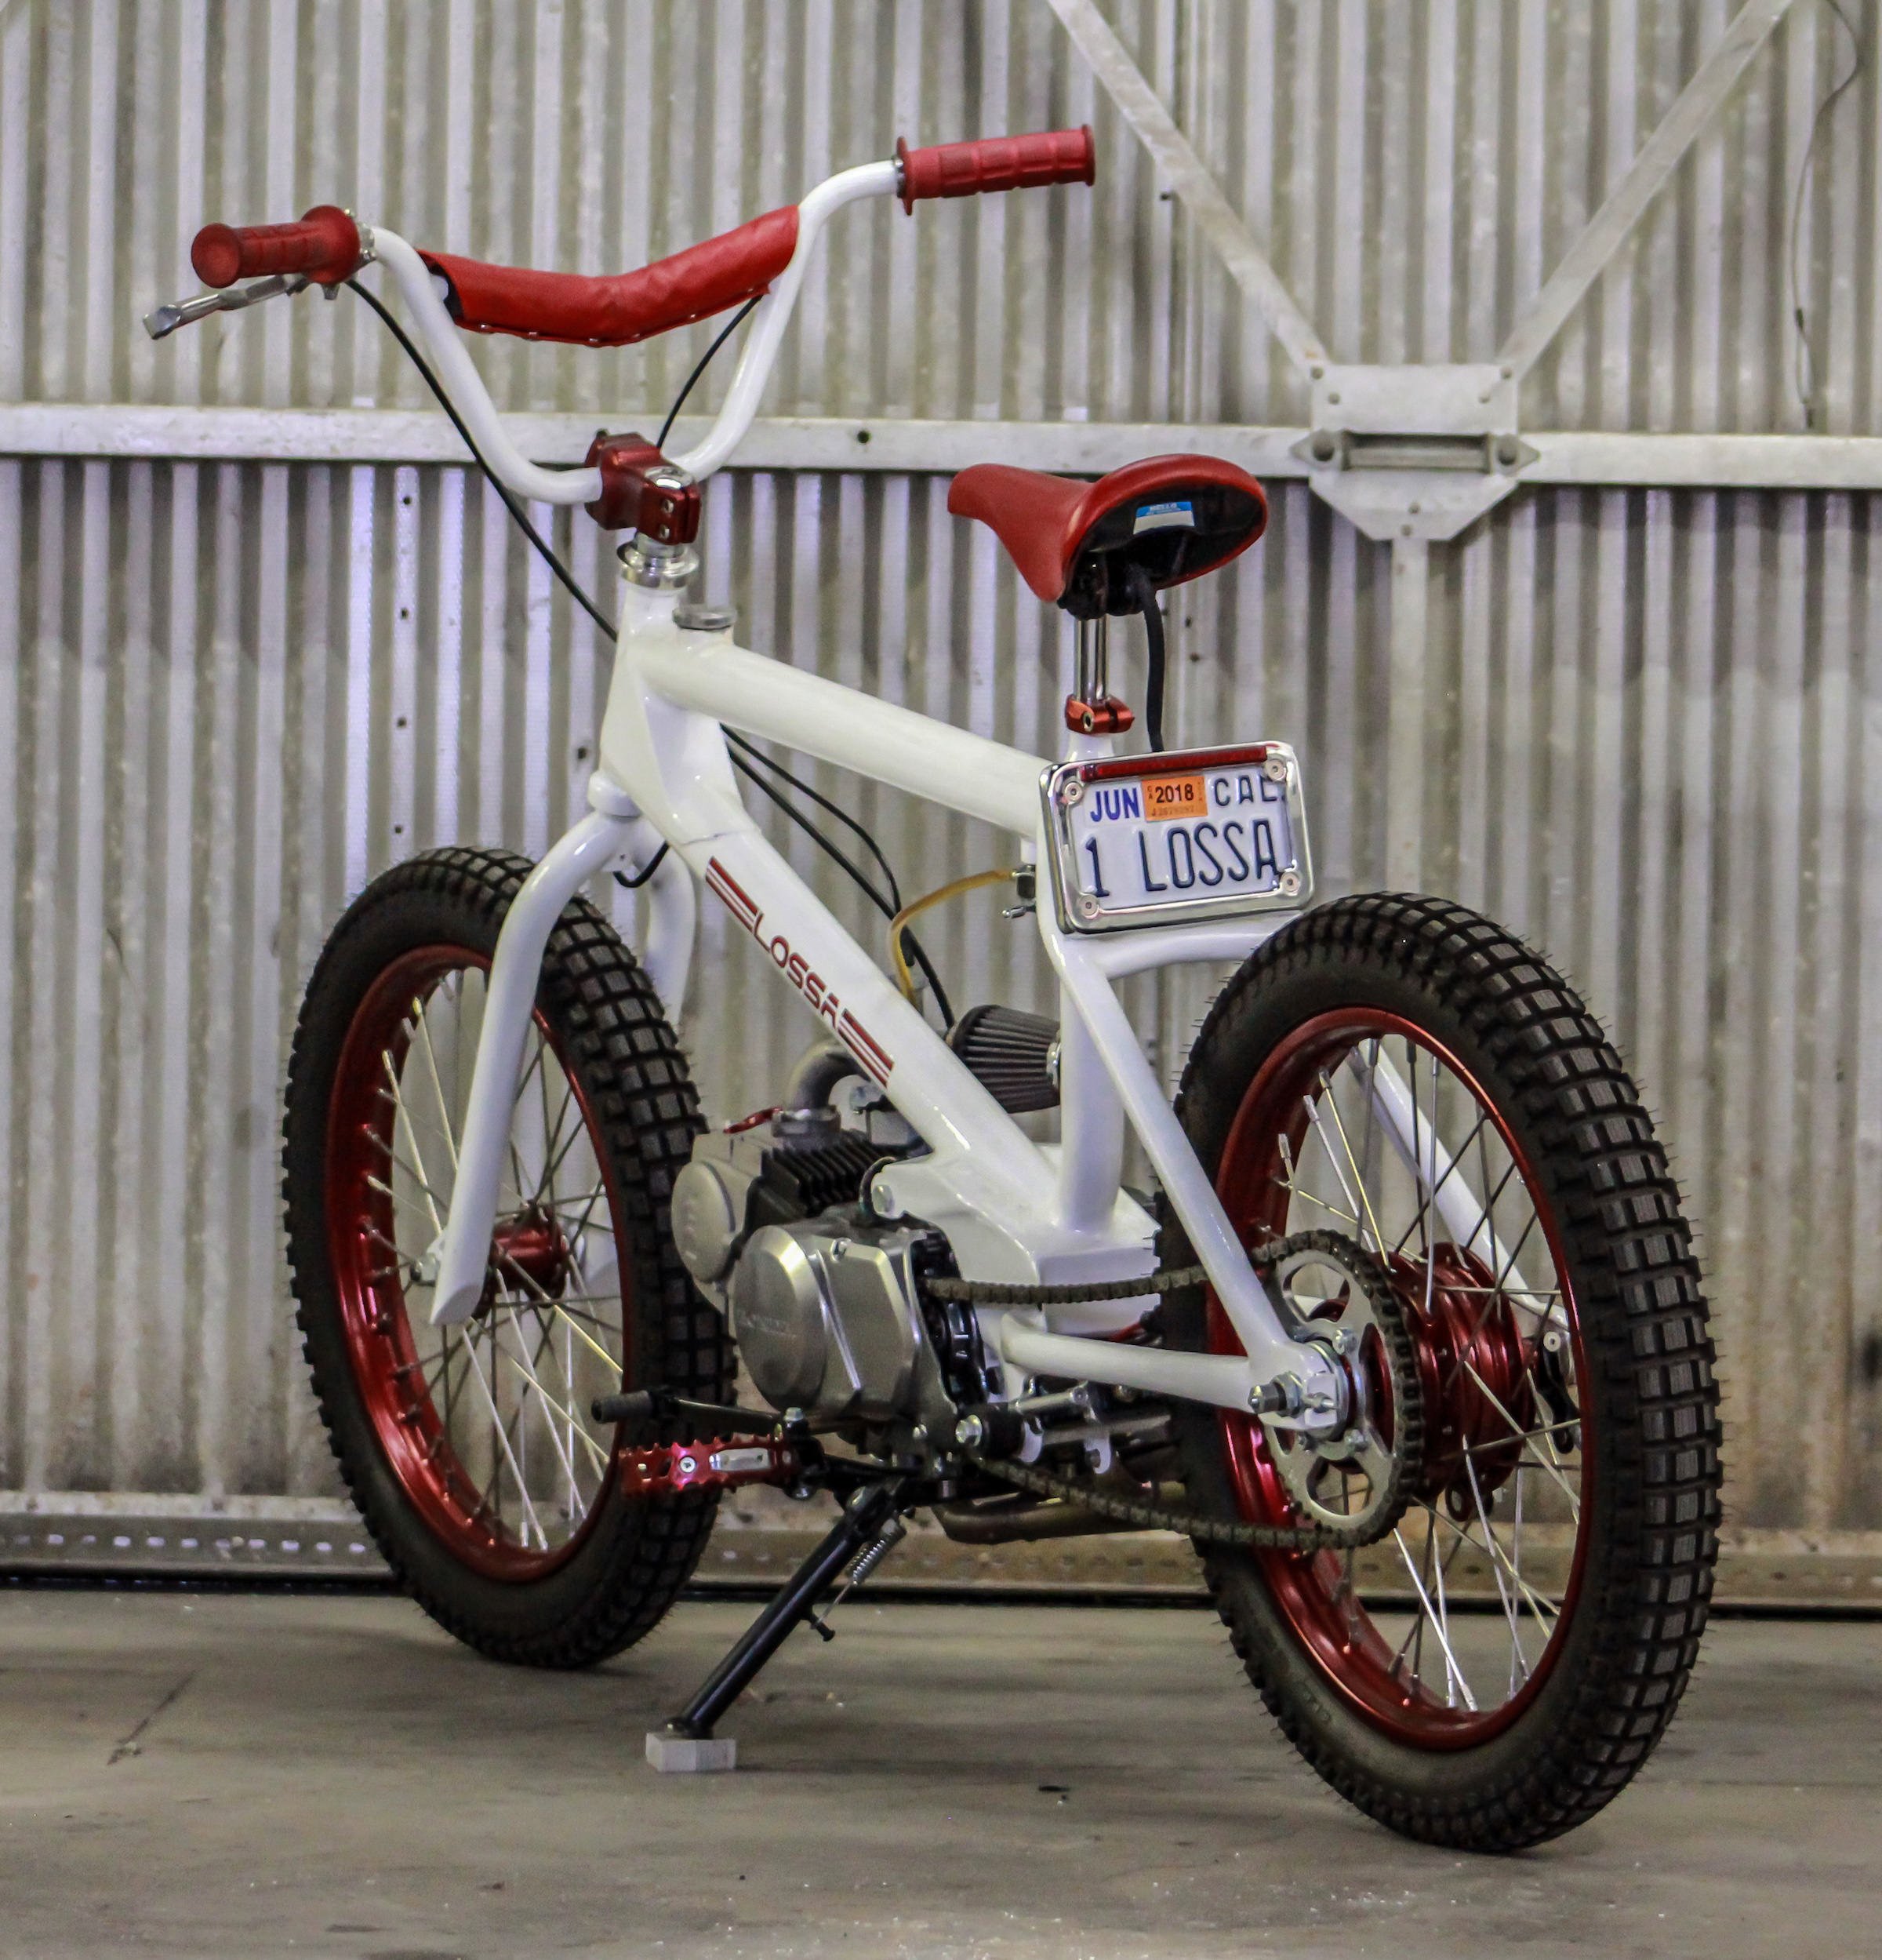 The x Honda BMX Bike by Lossa Engineering